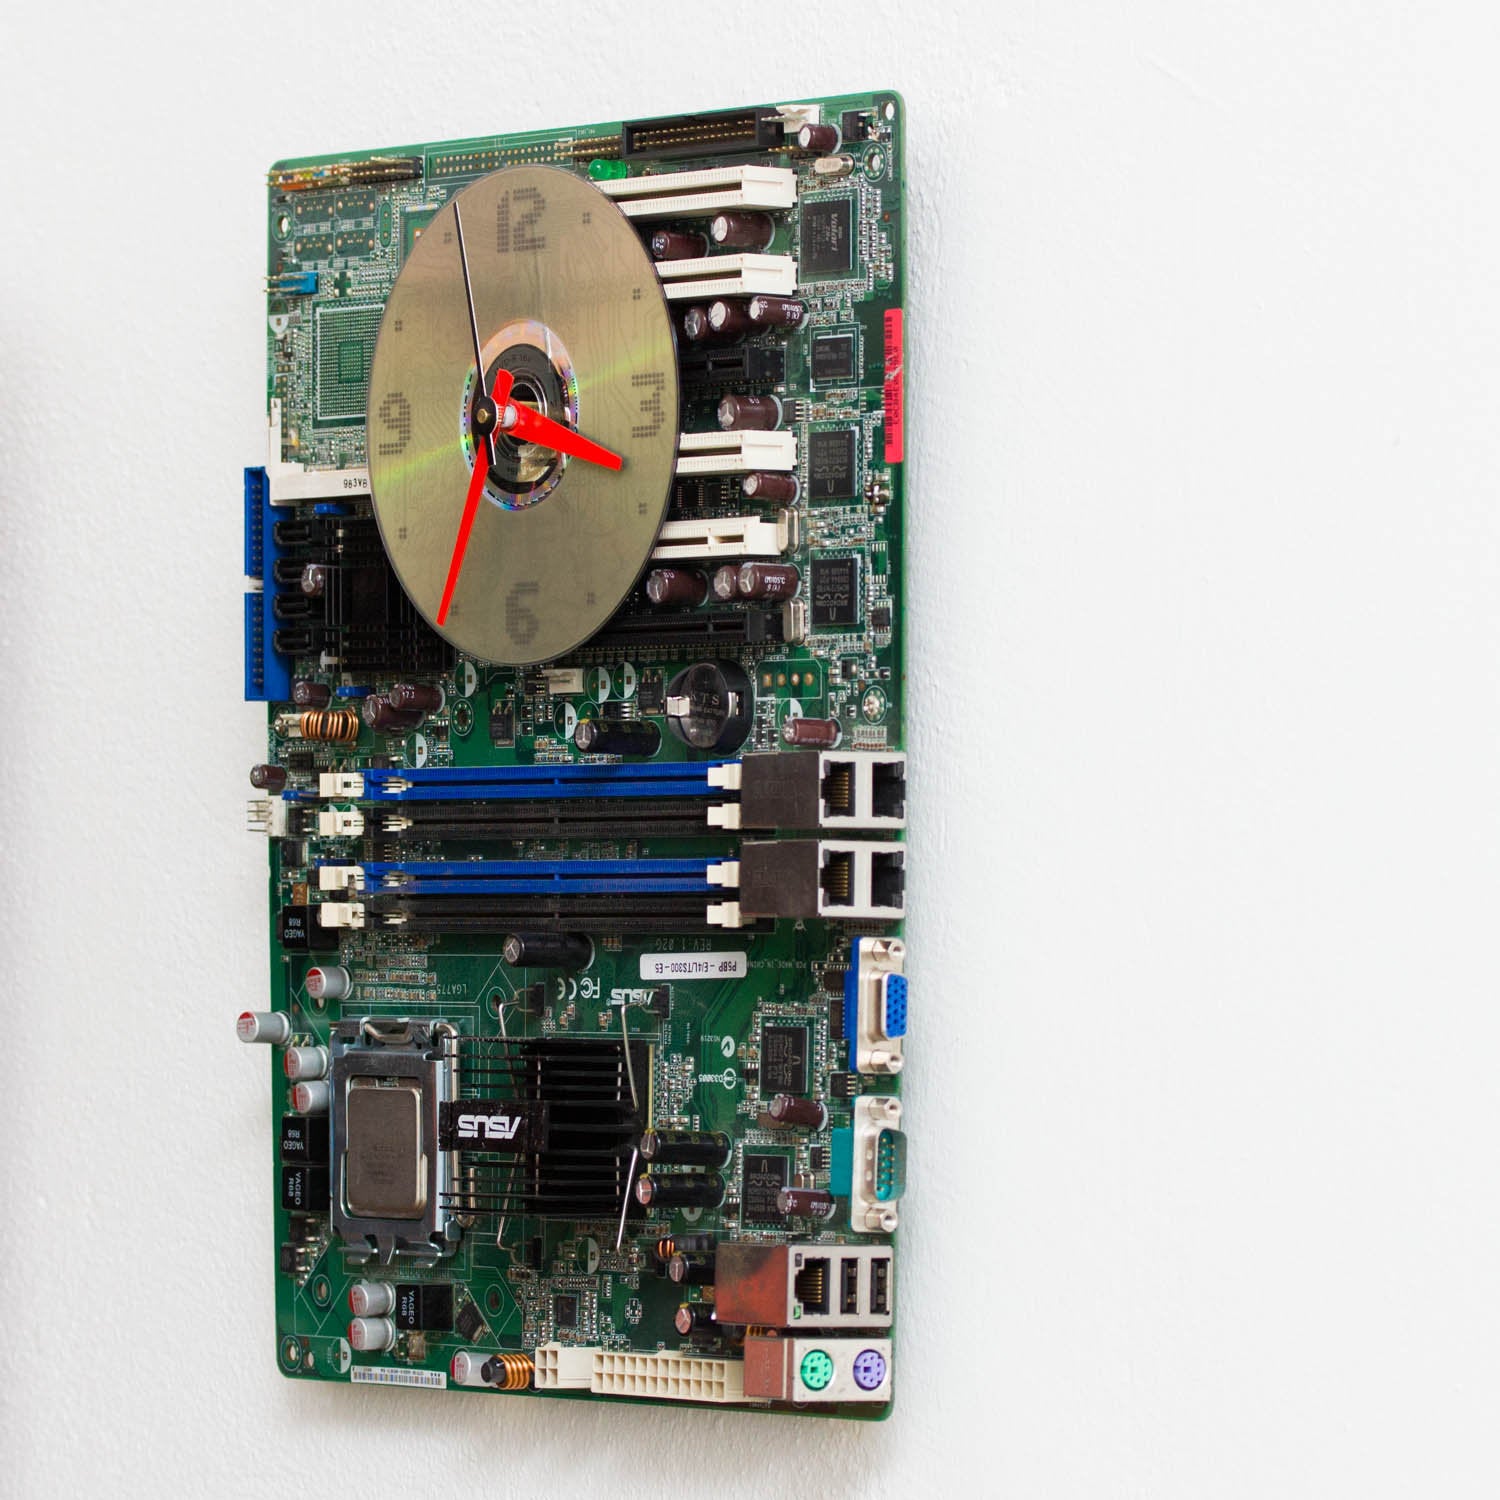 Geeky Wall Clock made of green circuit board